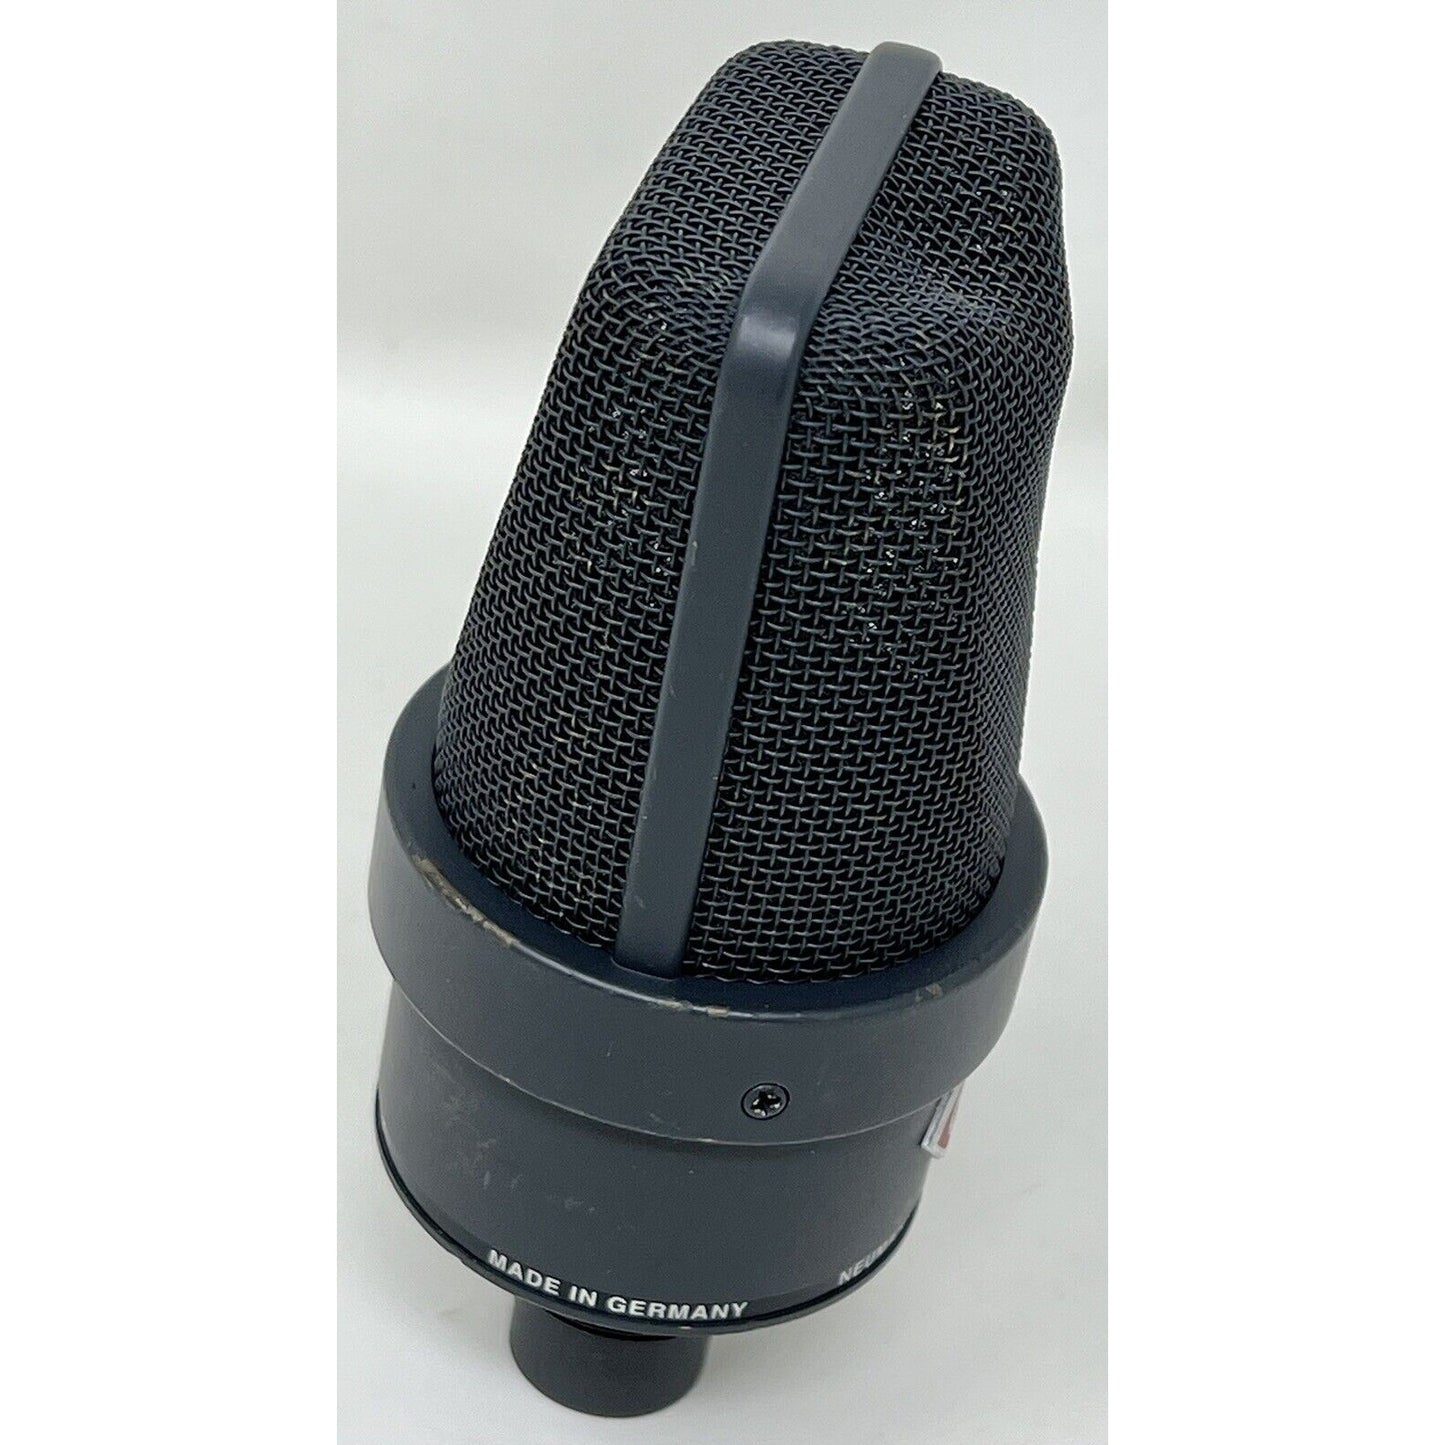 Neumann TLM 103 MT Large Diaphragm Cardioid Microphone - Black